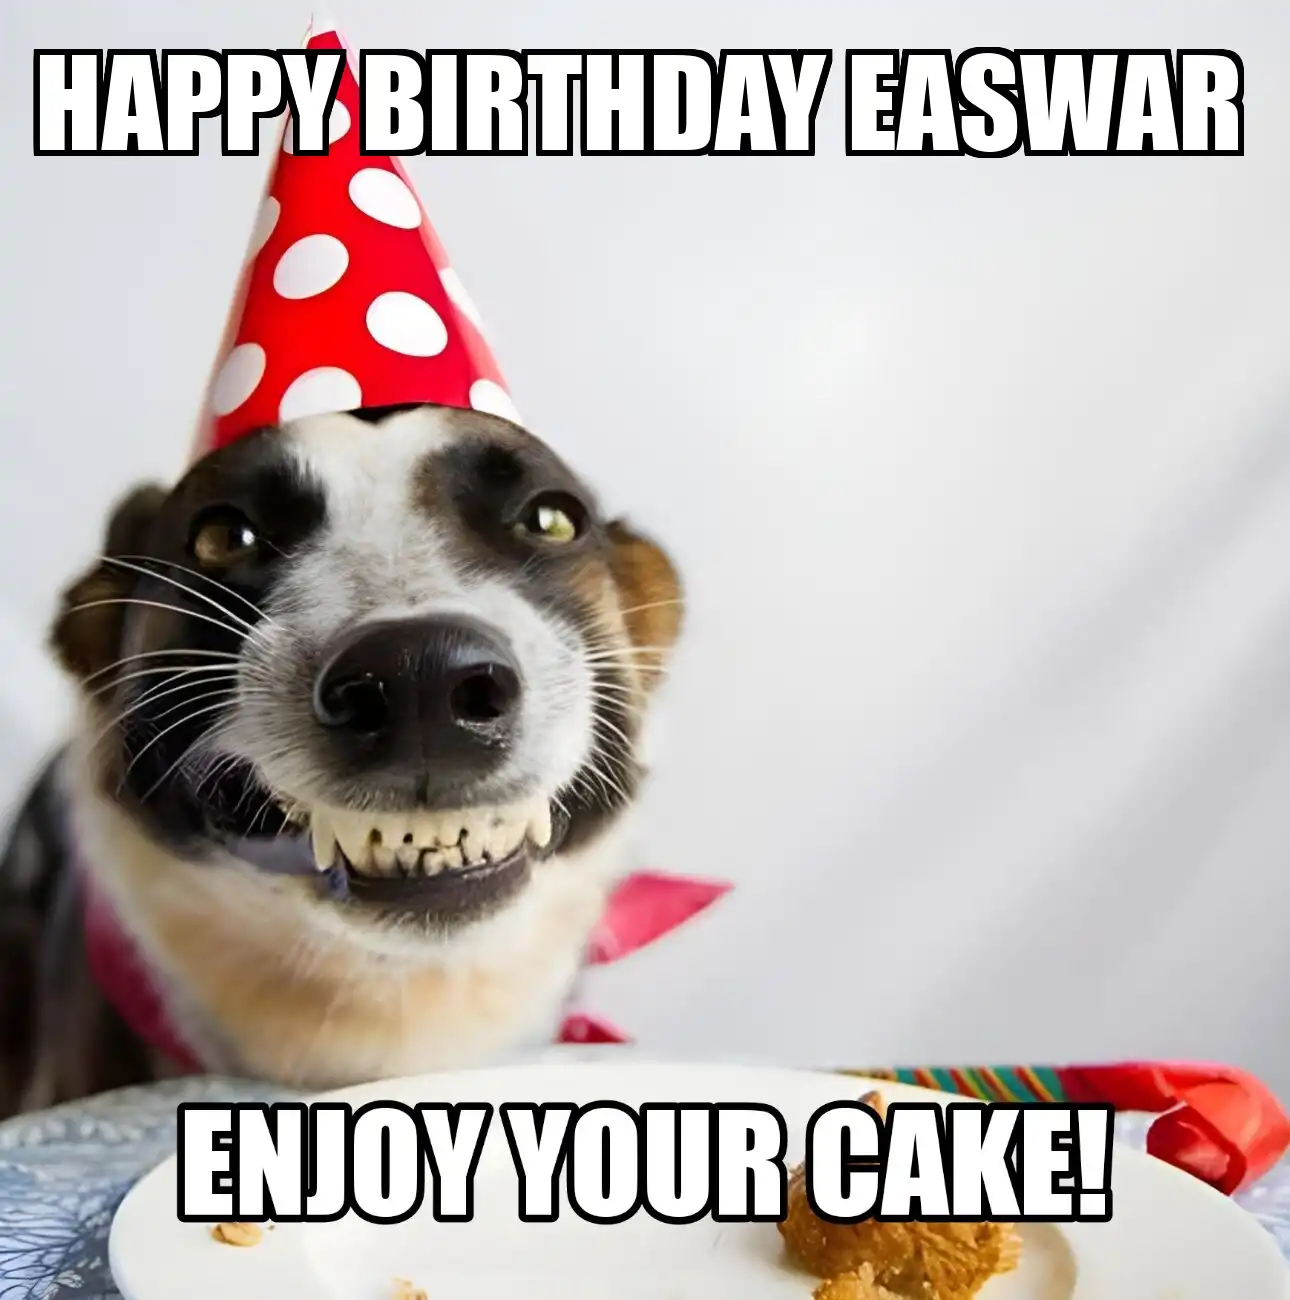 Happy Birthday Easwar Enjoy Your Cake Dog Meme